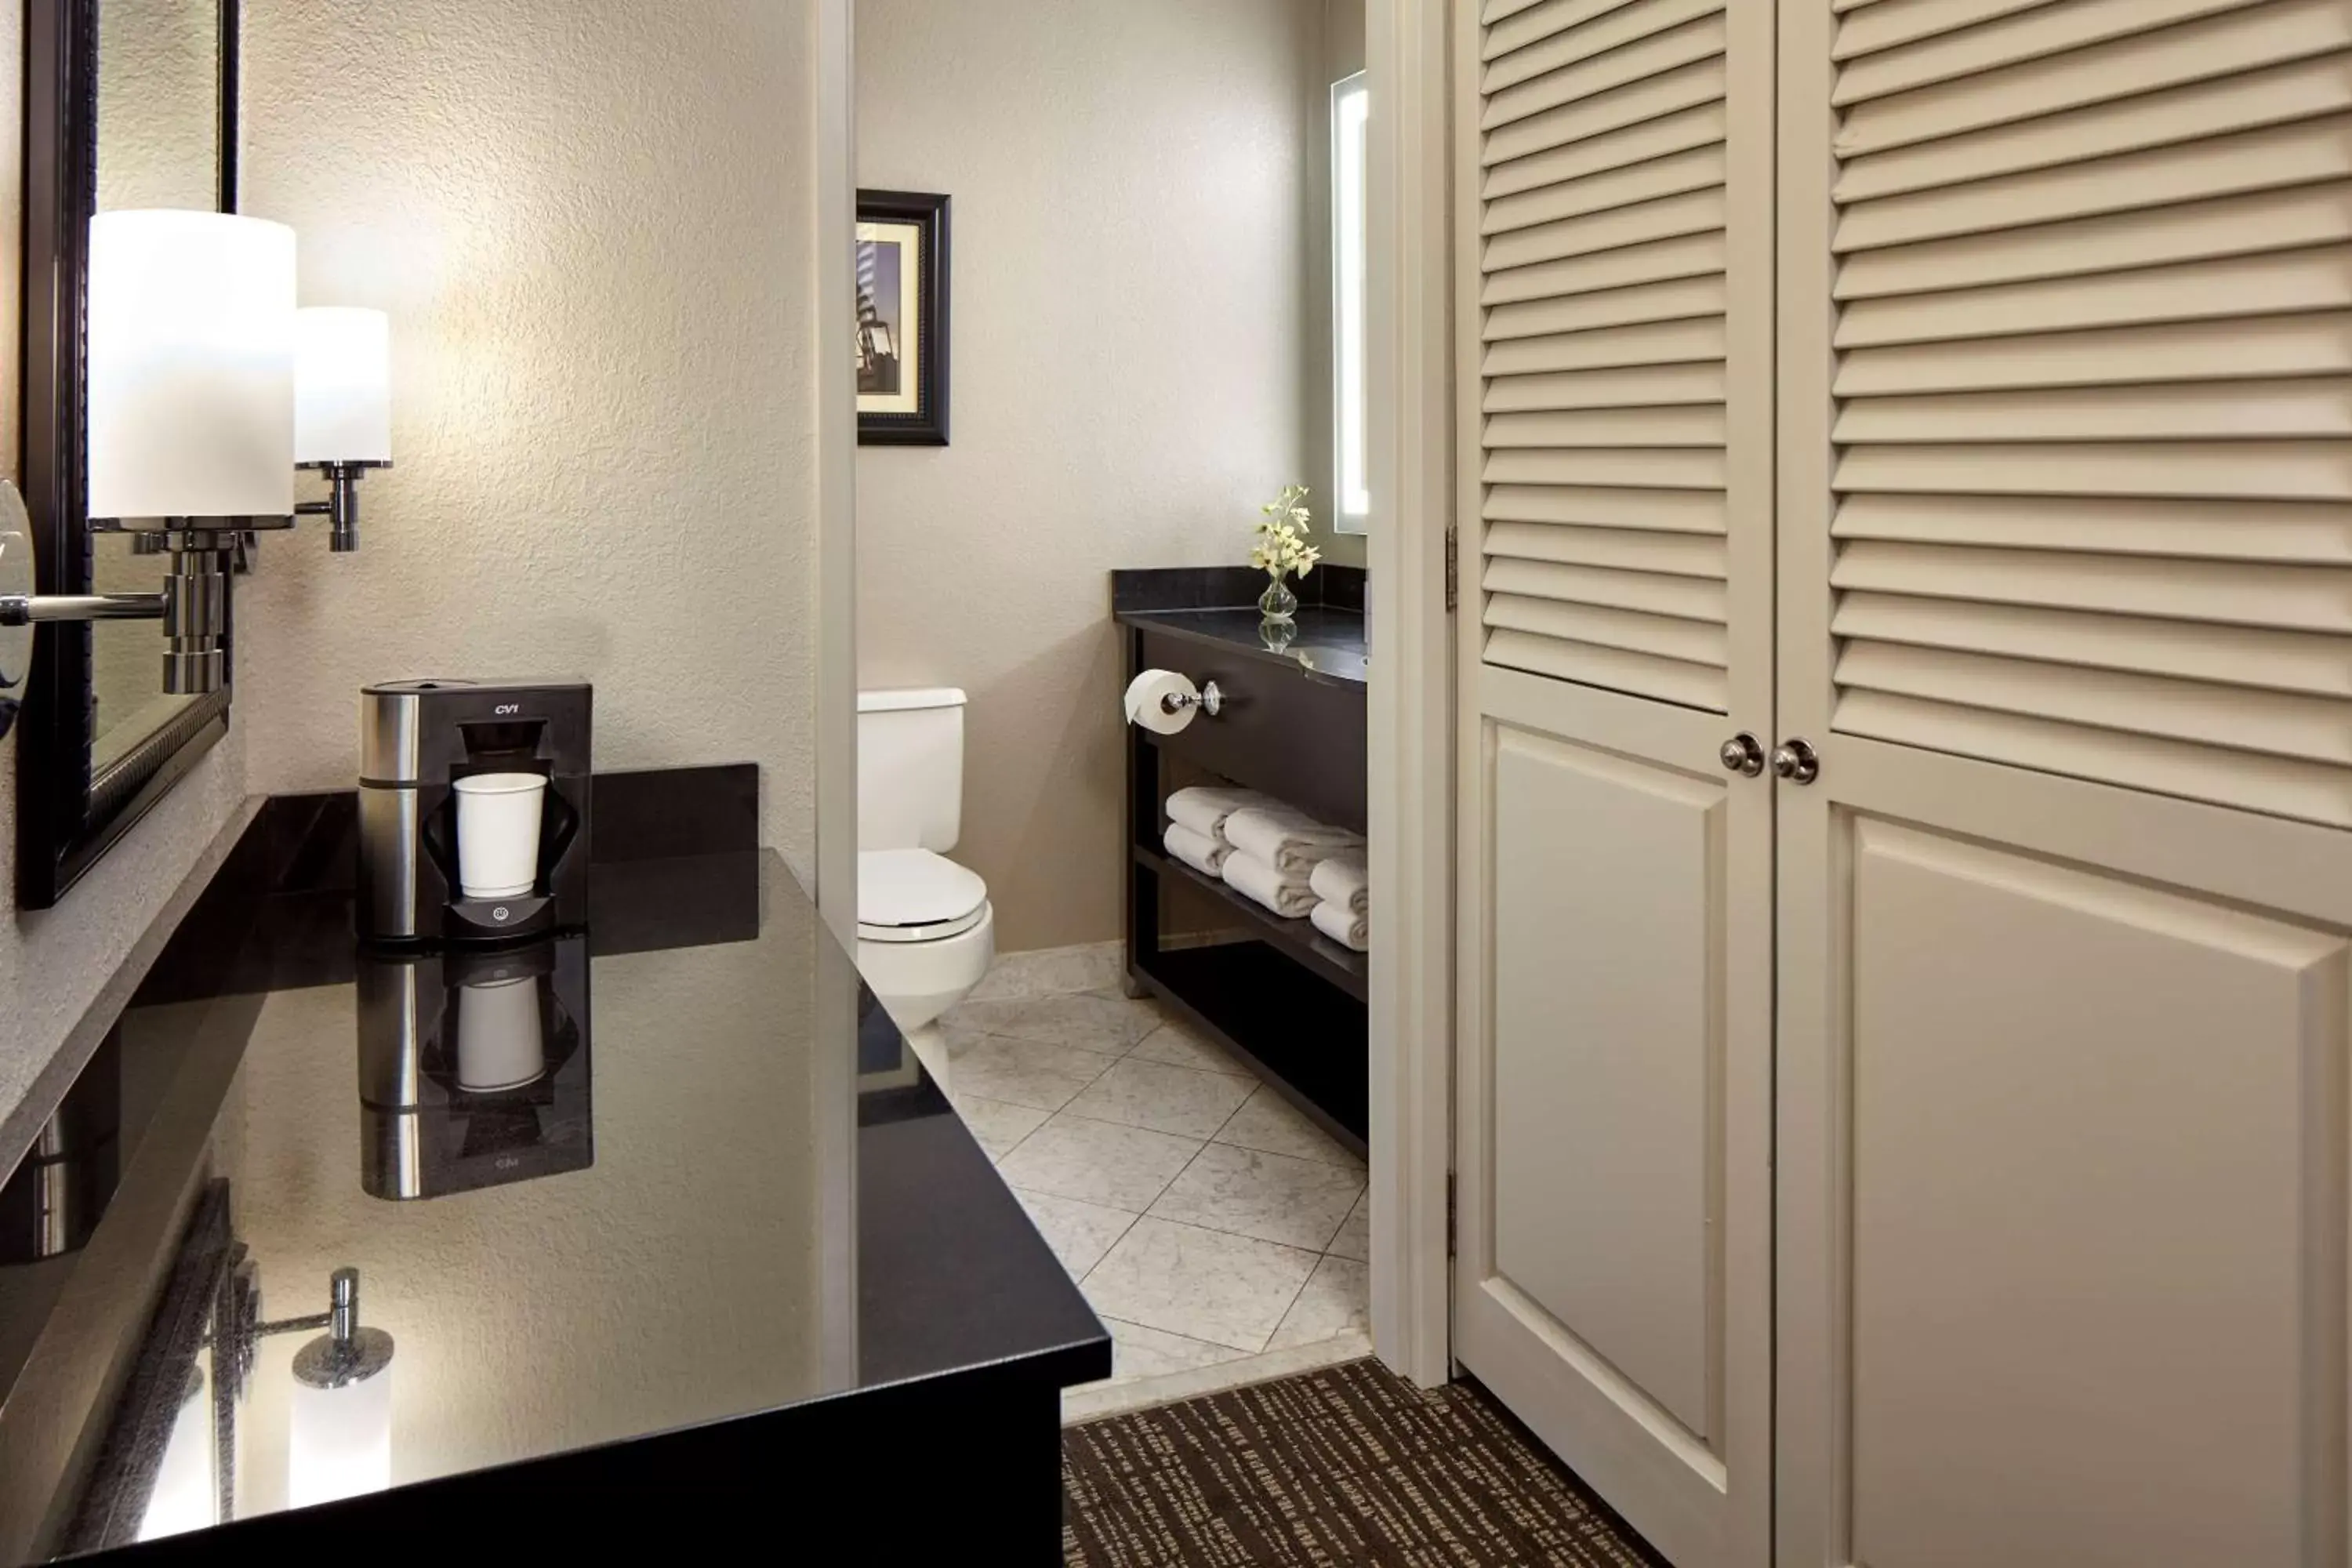 Photo of the whole room, Bathroom in Hyatt Regency Tulsa Downtown